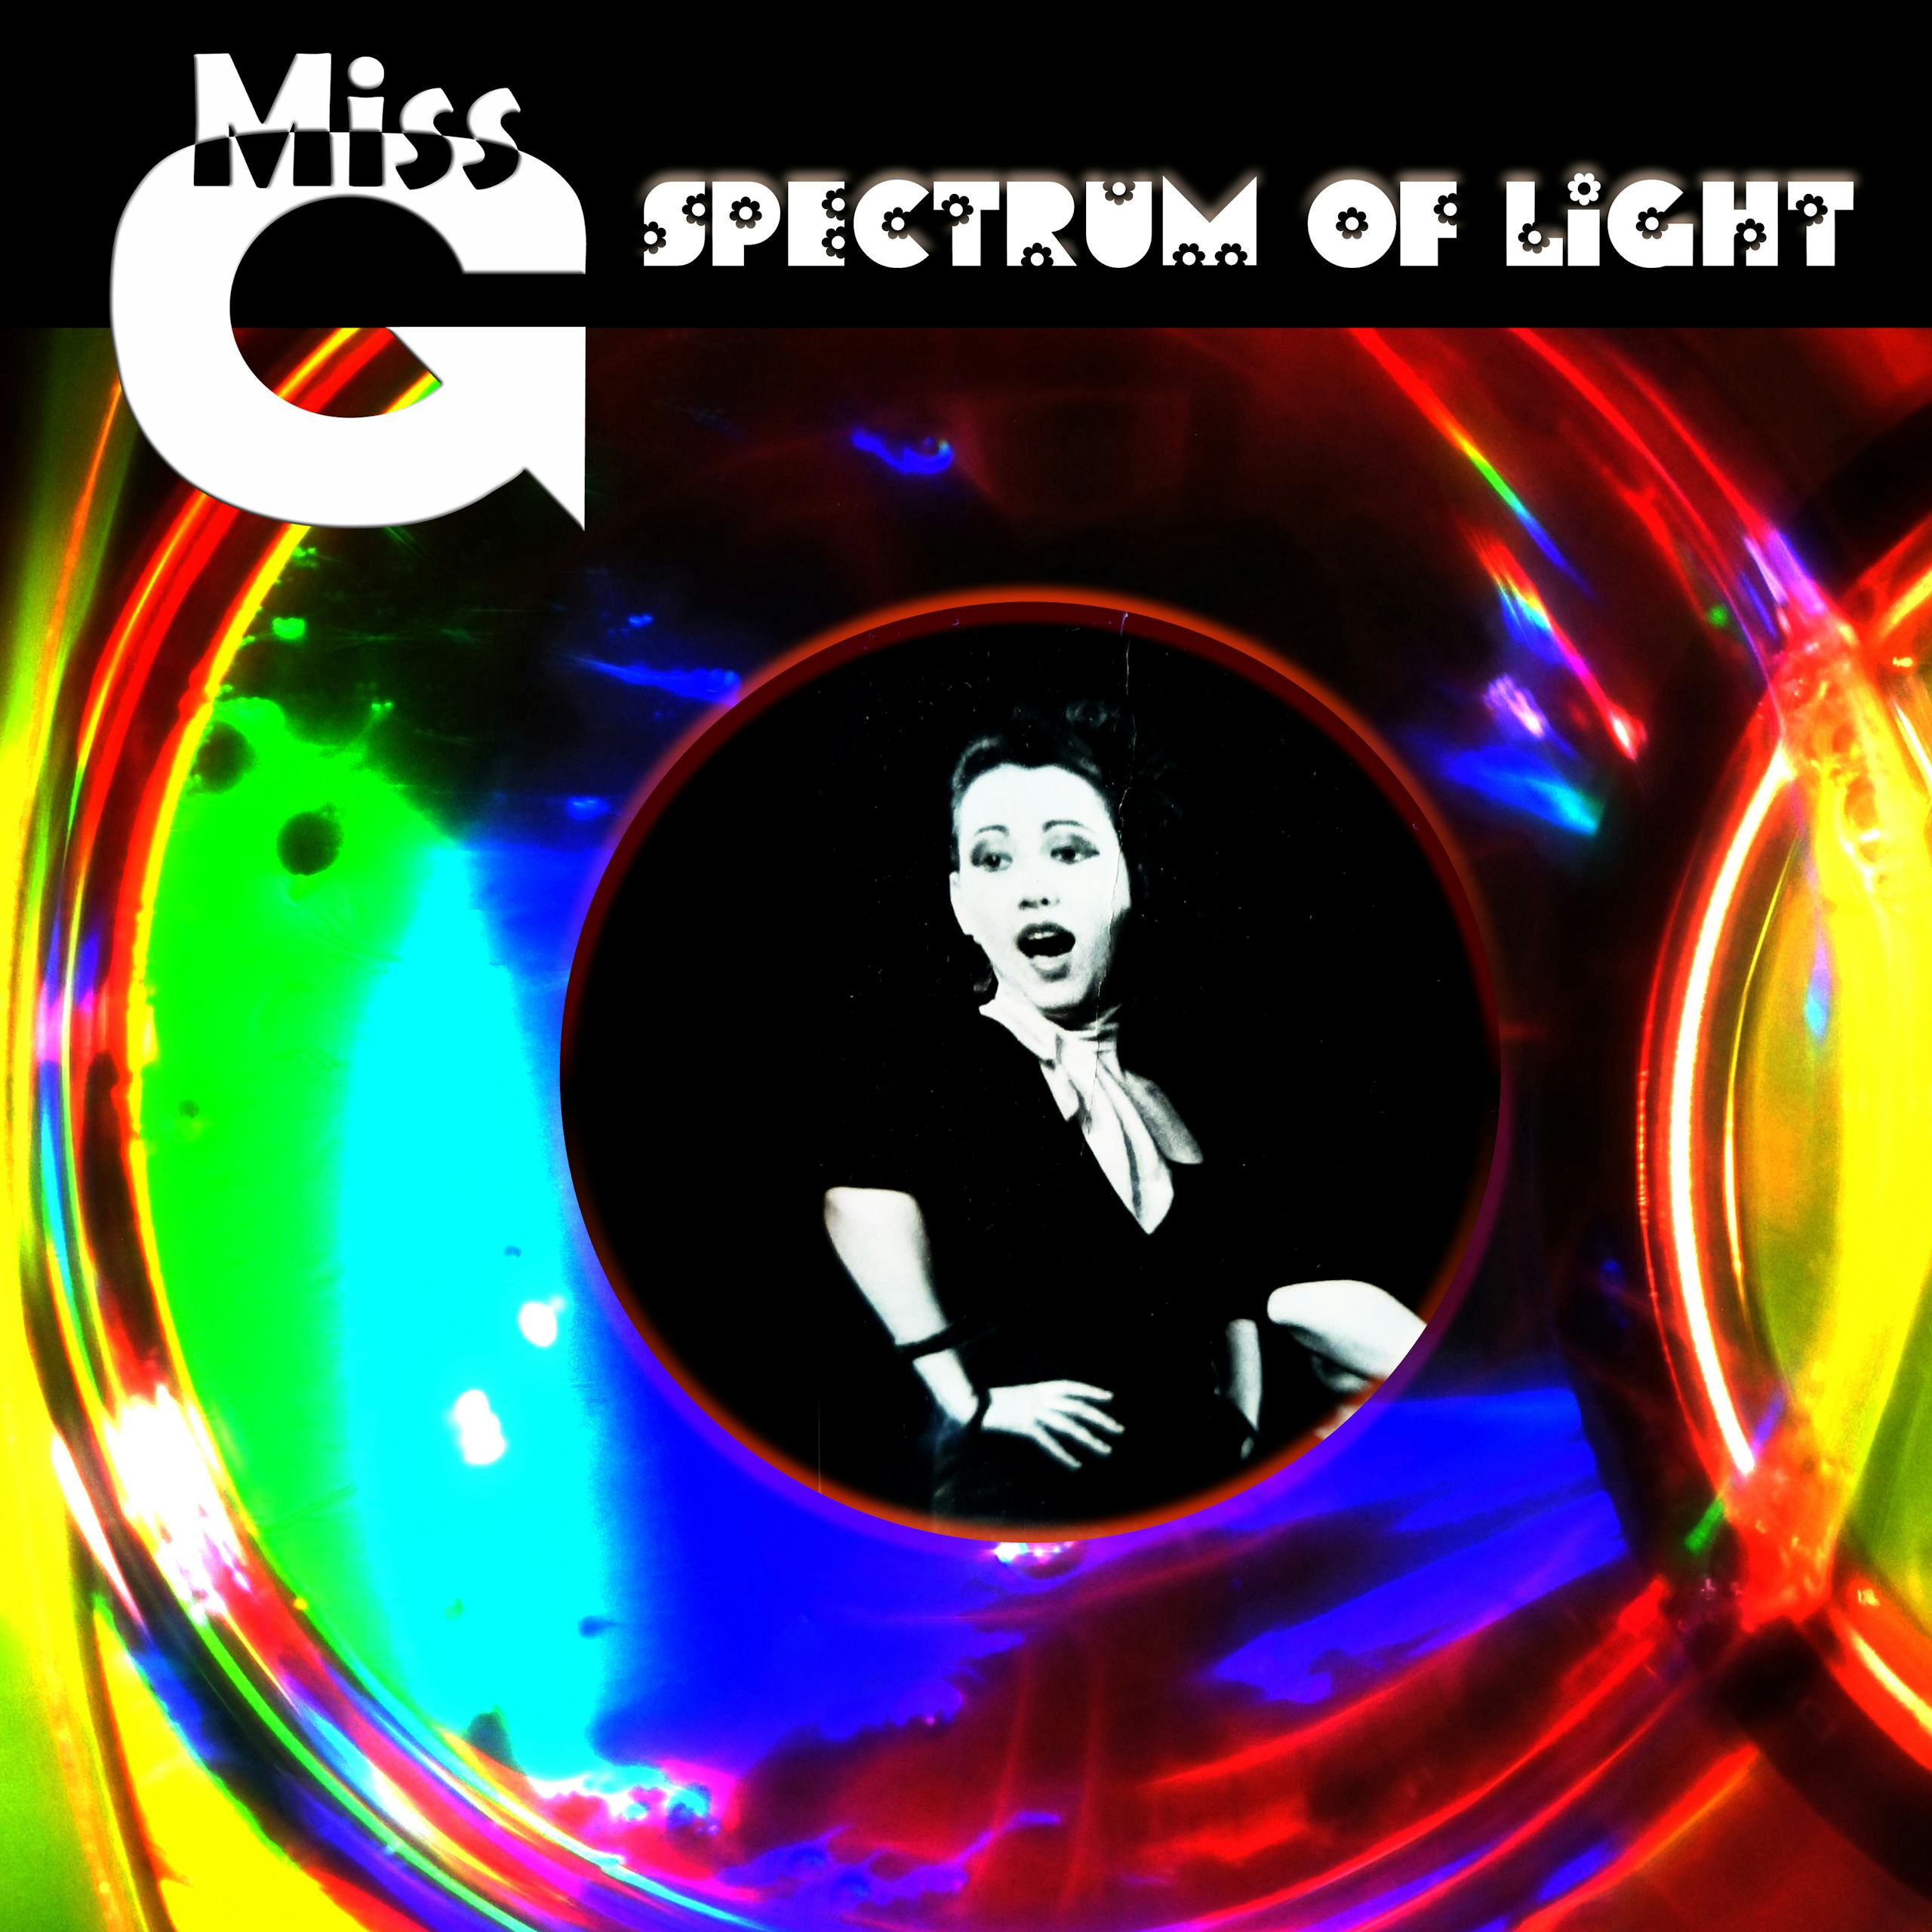 Spectrum of light